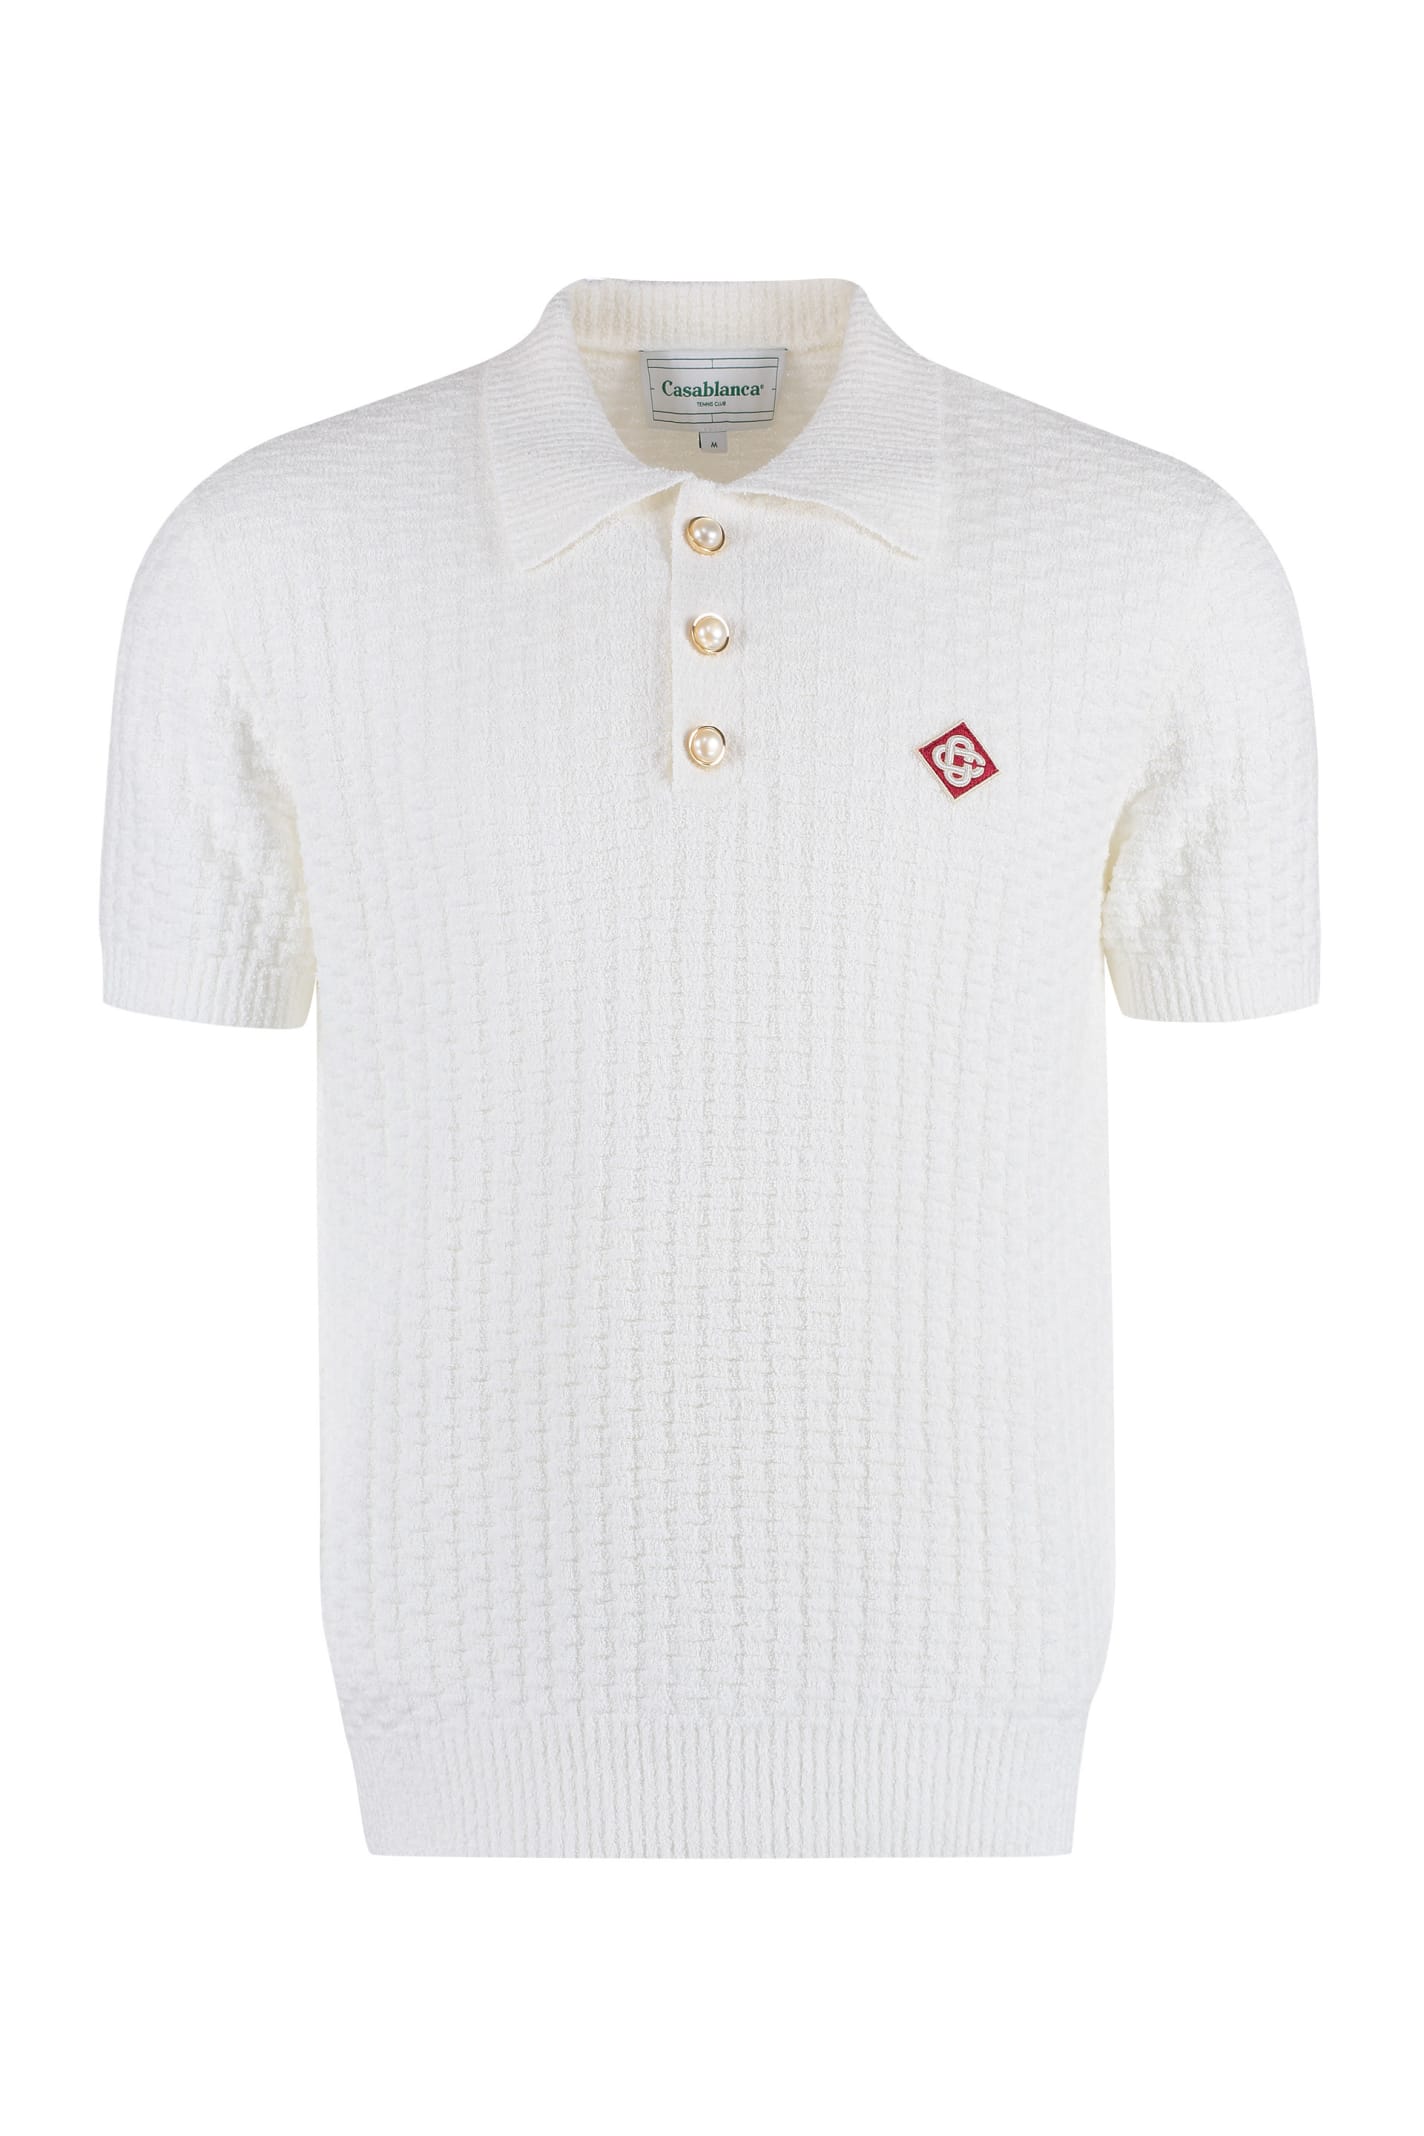 Casablanca Knitted Cotton Polo Shirt